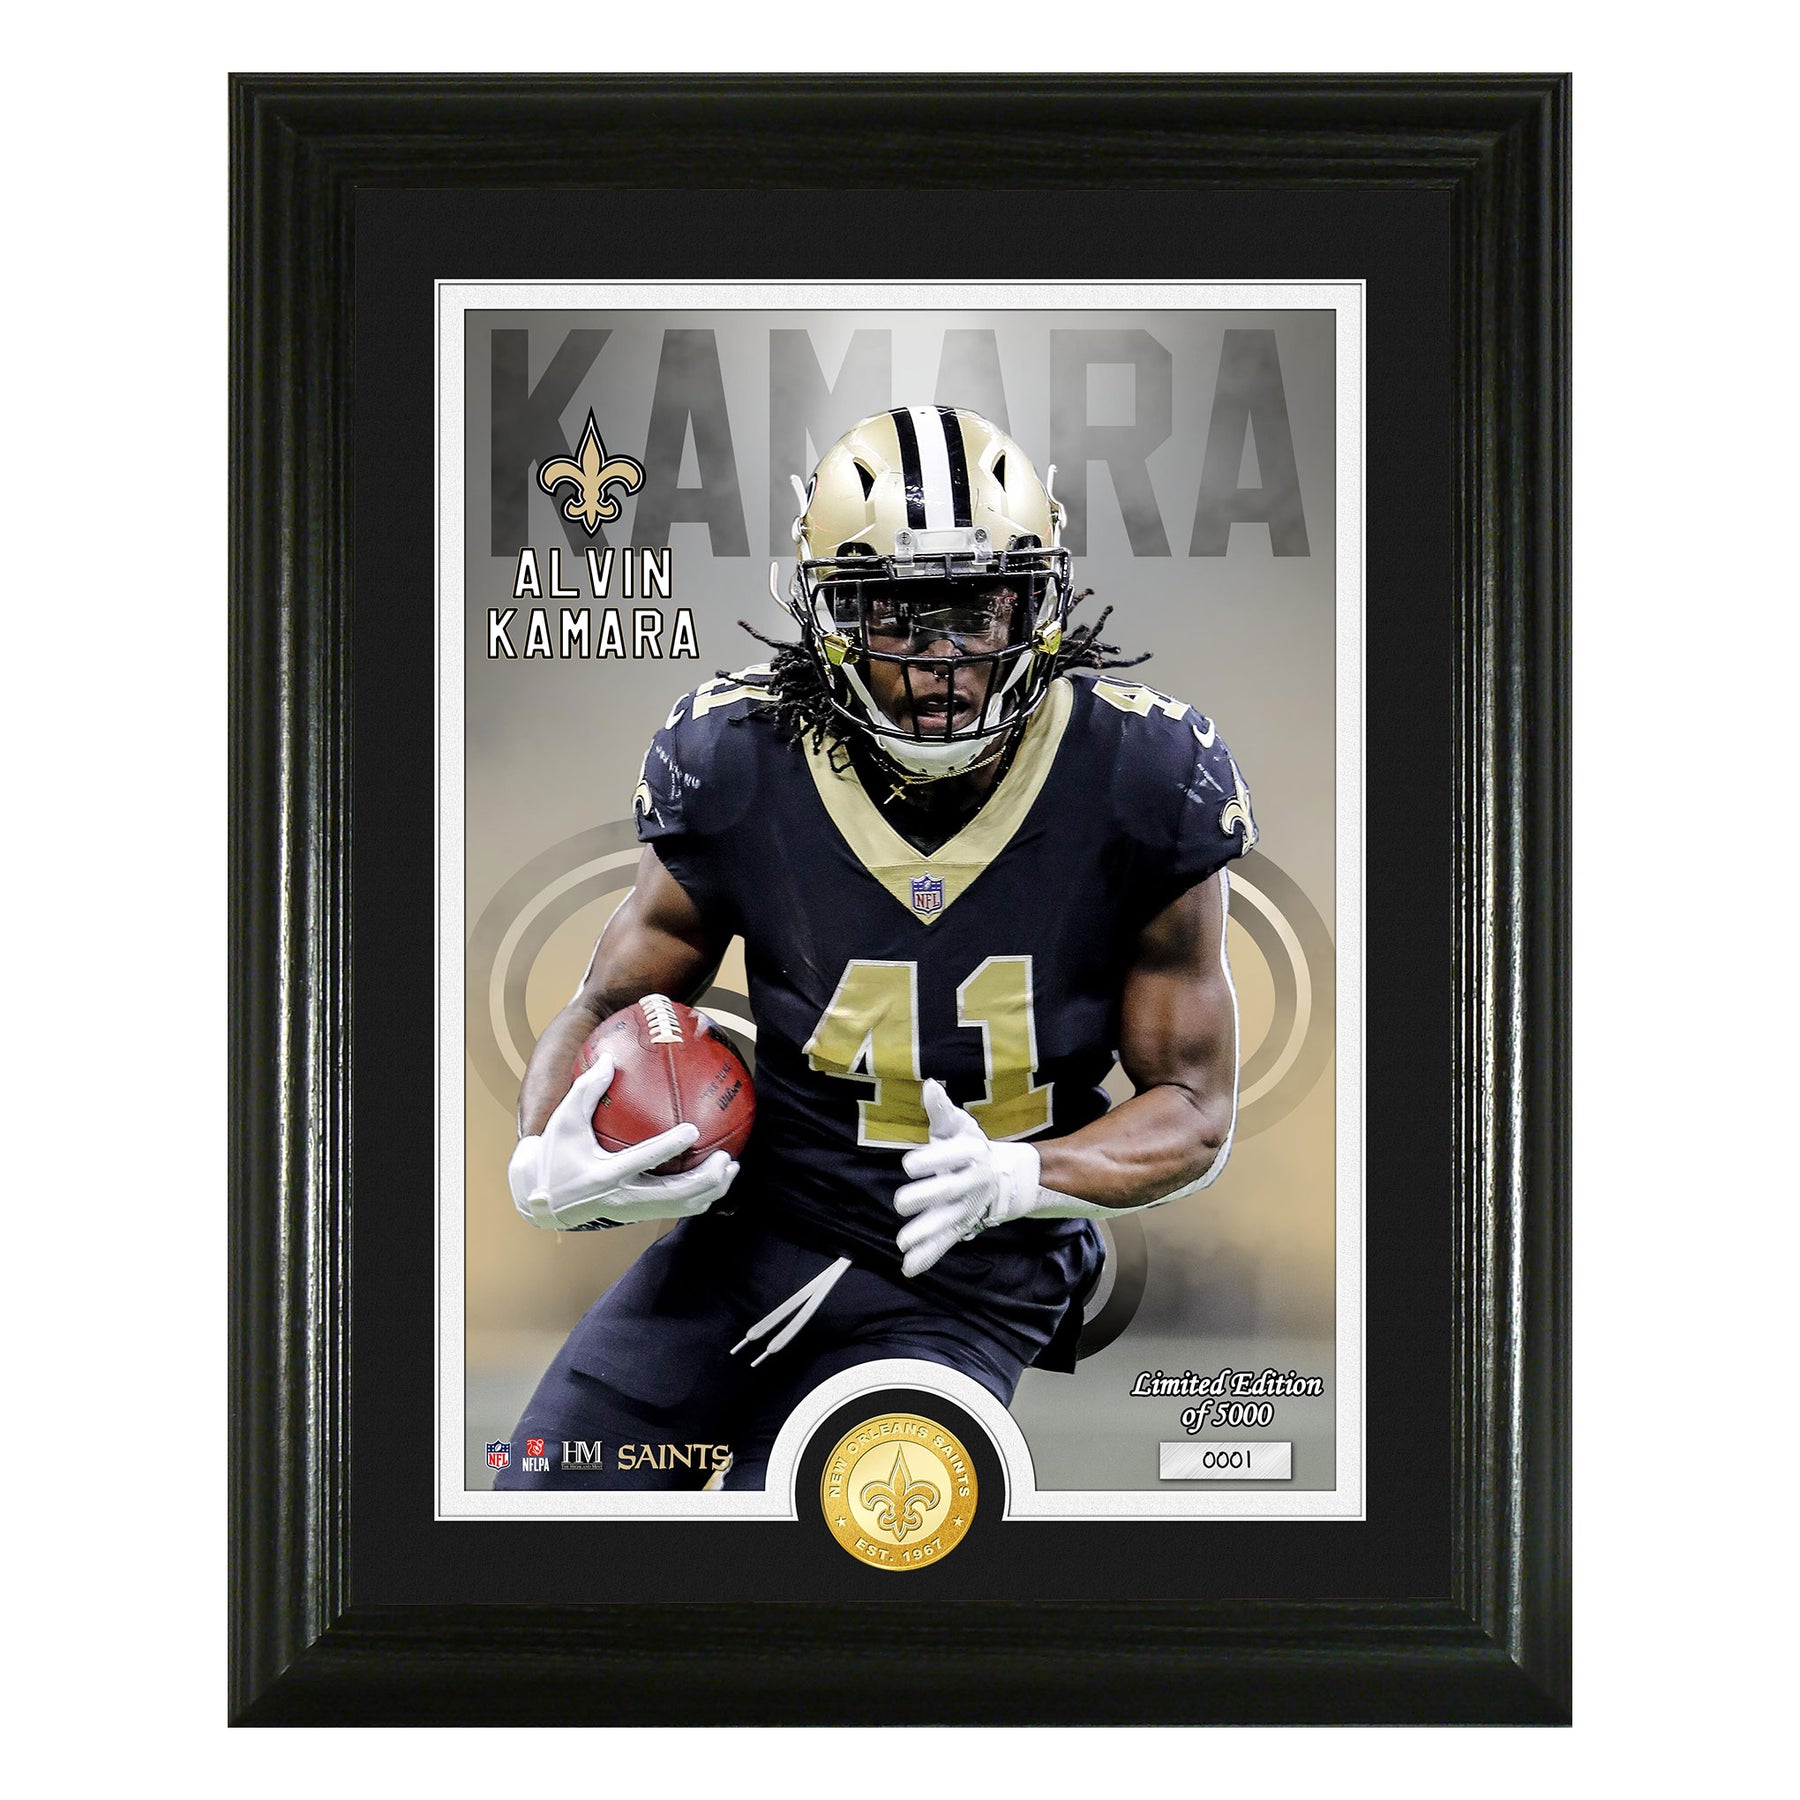 NFL Alvin Kamara (Saints) Player Coin in Framed Photo